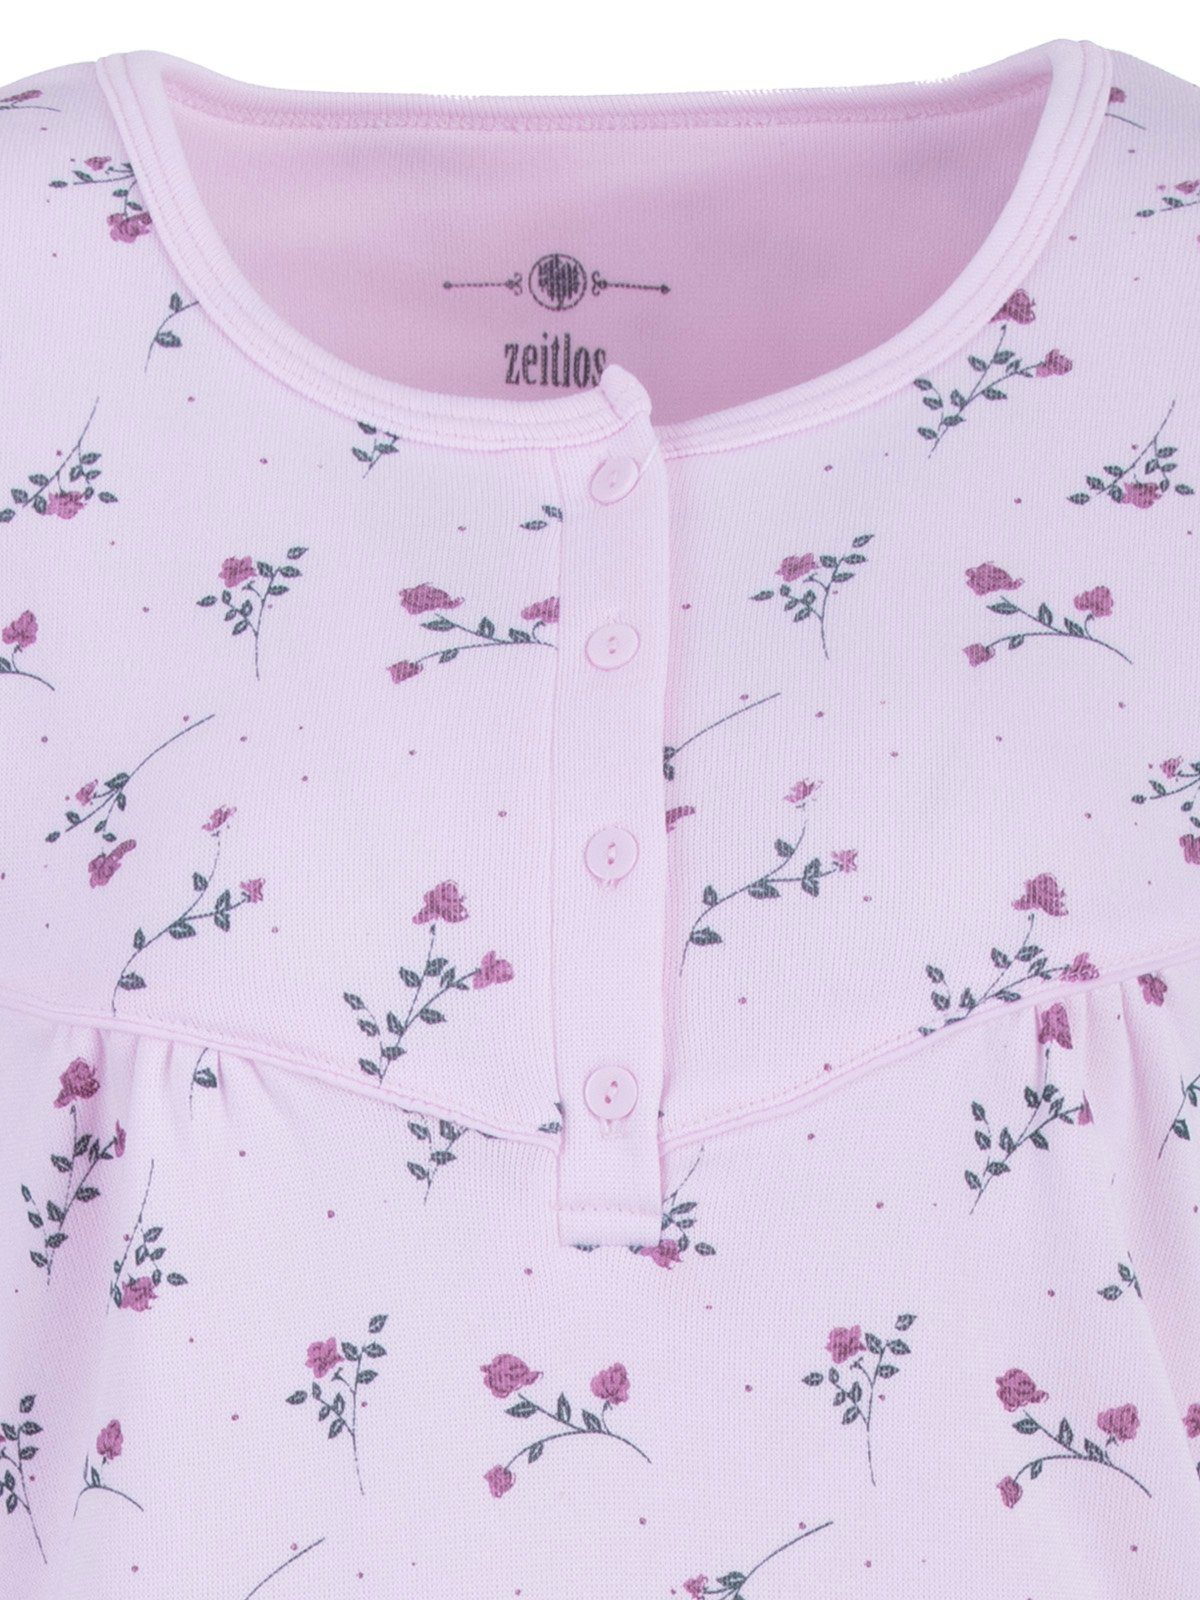 zeitlos Nachthemd Thermo Nachthemd Paspel rosa Blumen 